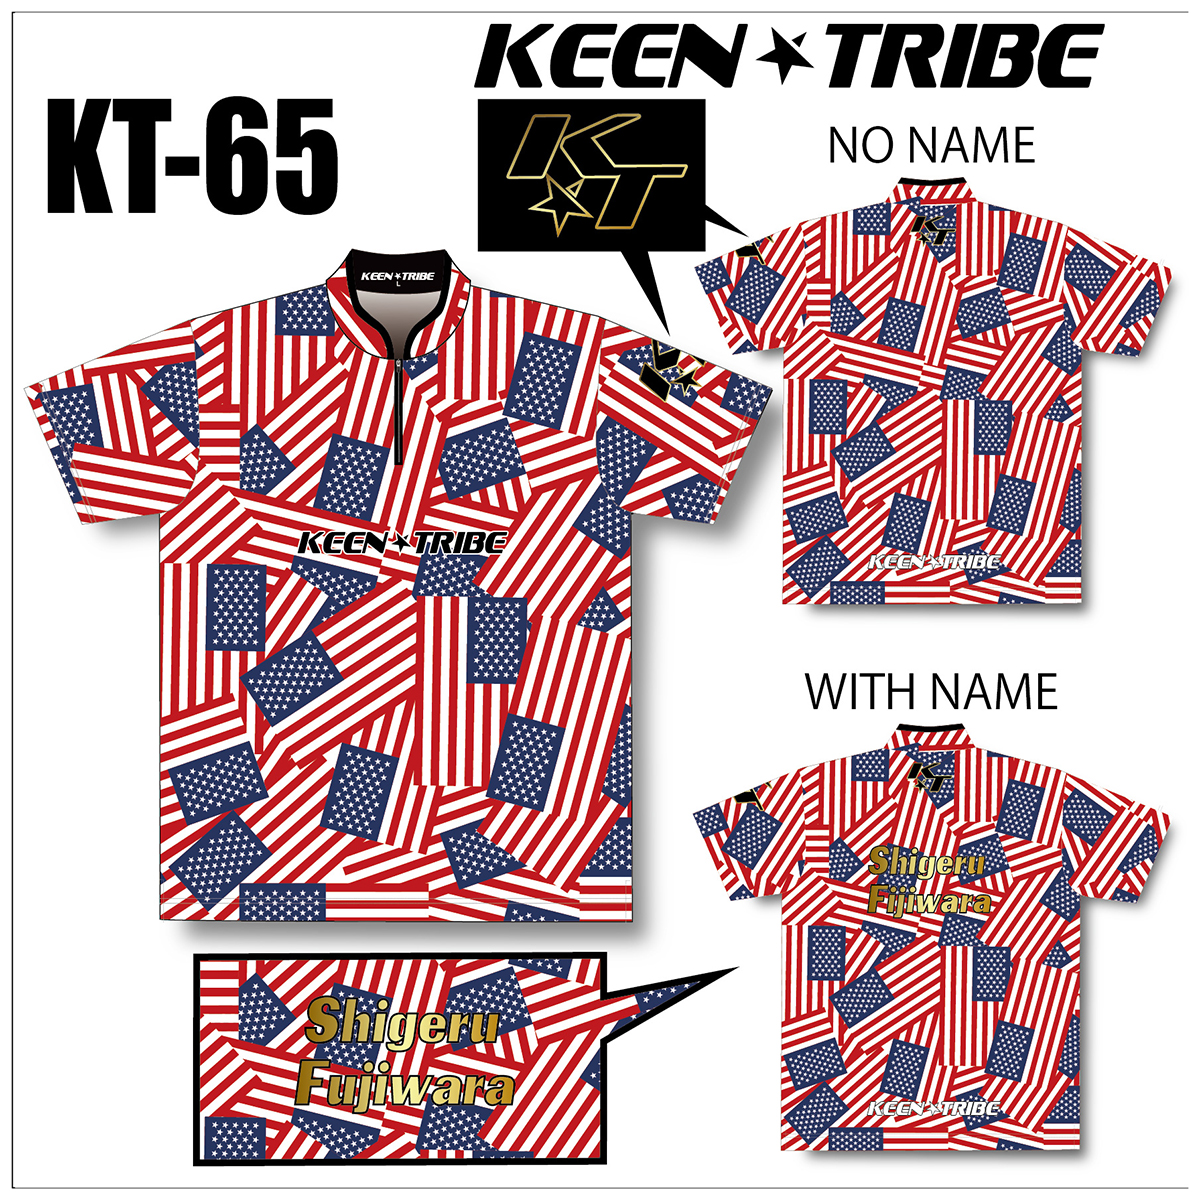 KEEN ★ TRIBE　KT-65(受注生産)【特別価格】